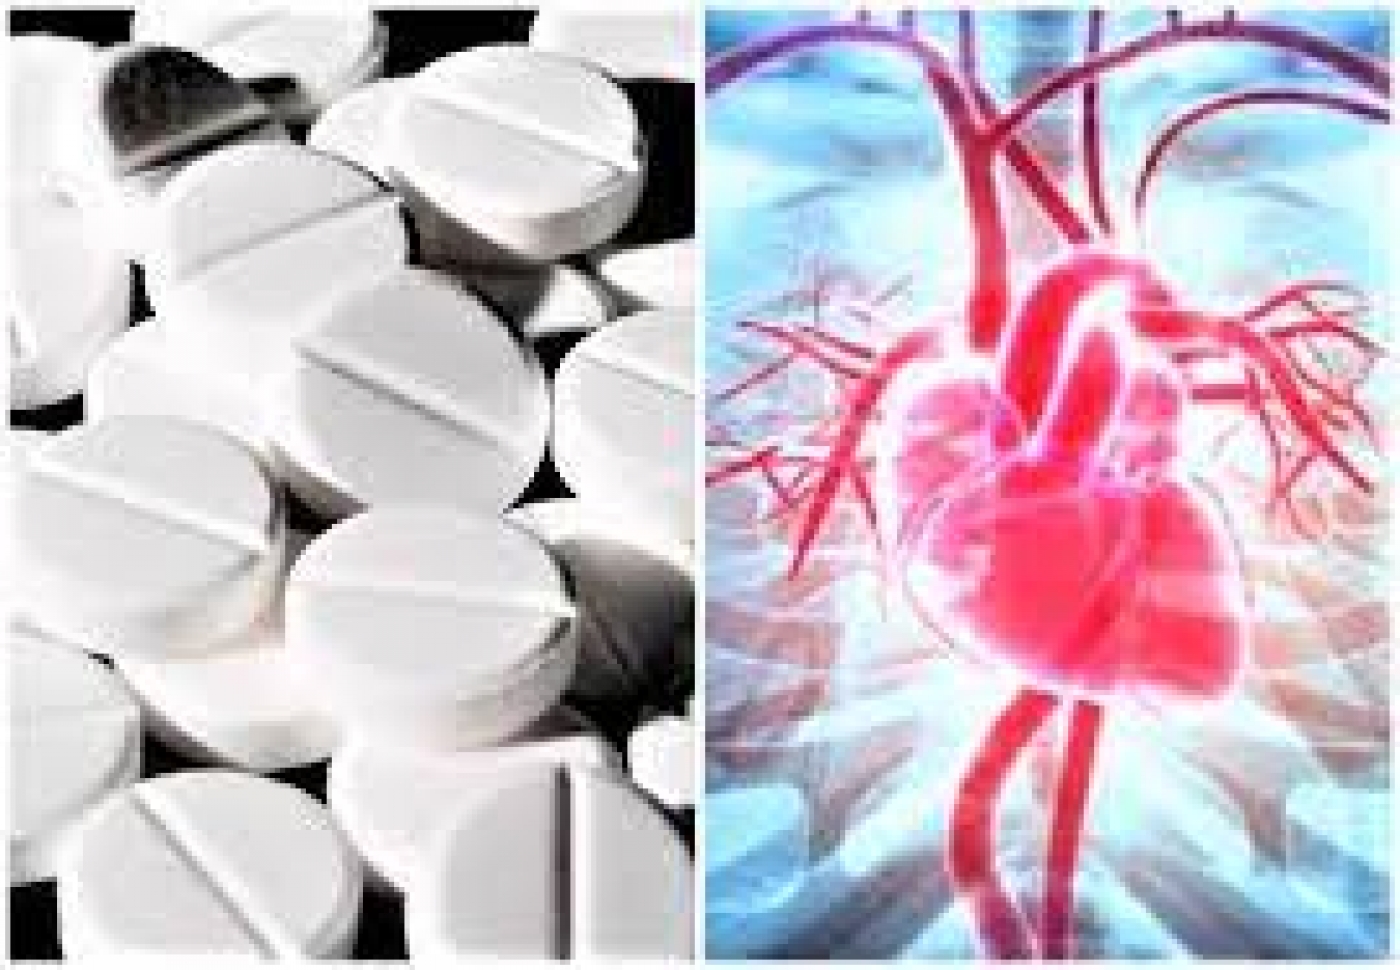 Regular use of paracetamol could increase risk of heart disease, stroke, study warns